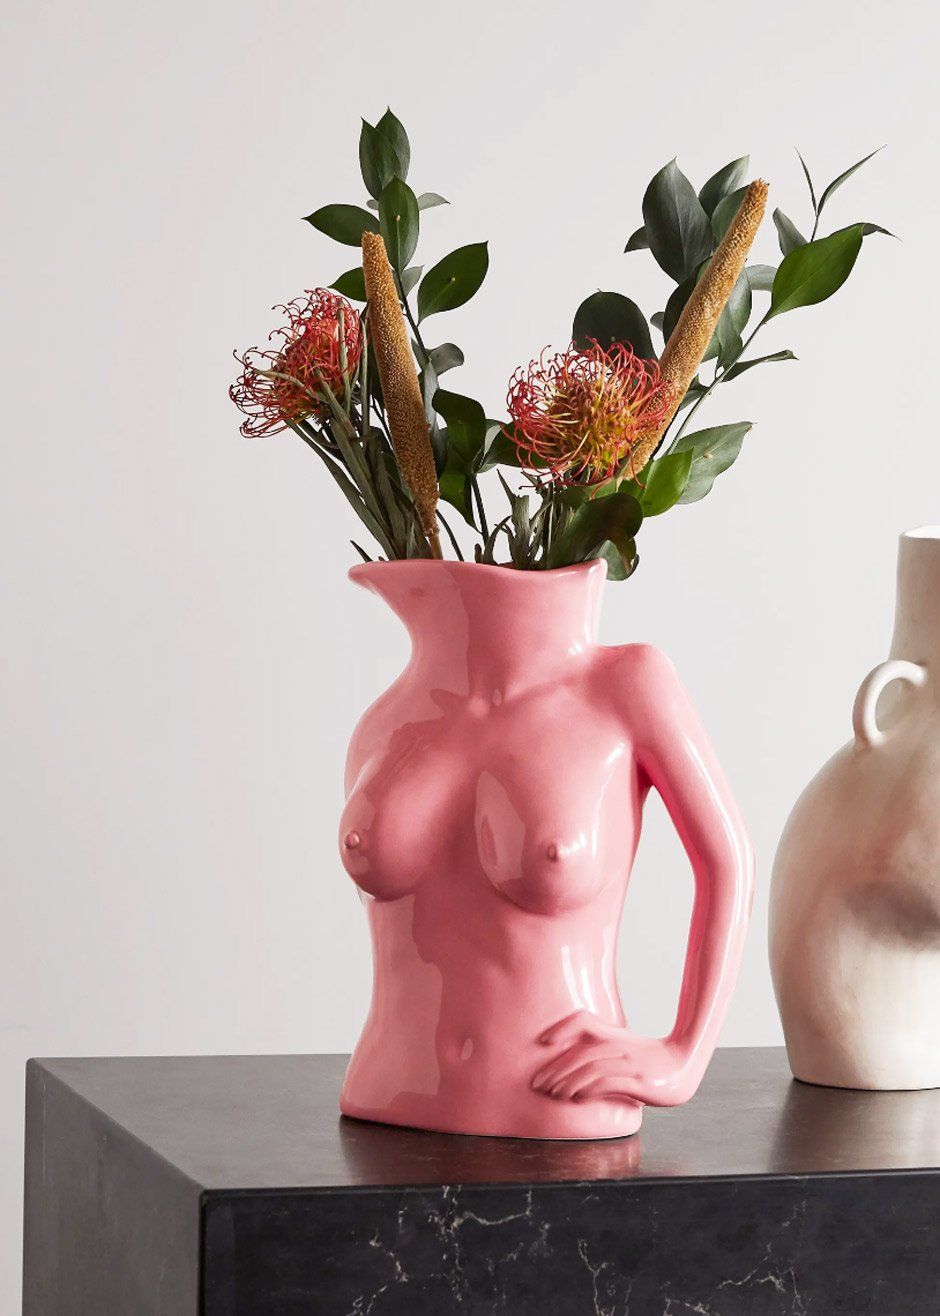 Anissa Kermiche Jugs Jug Ceramic Vase - Hot Pink - 1